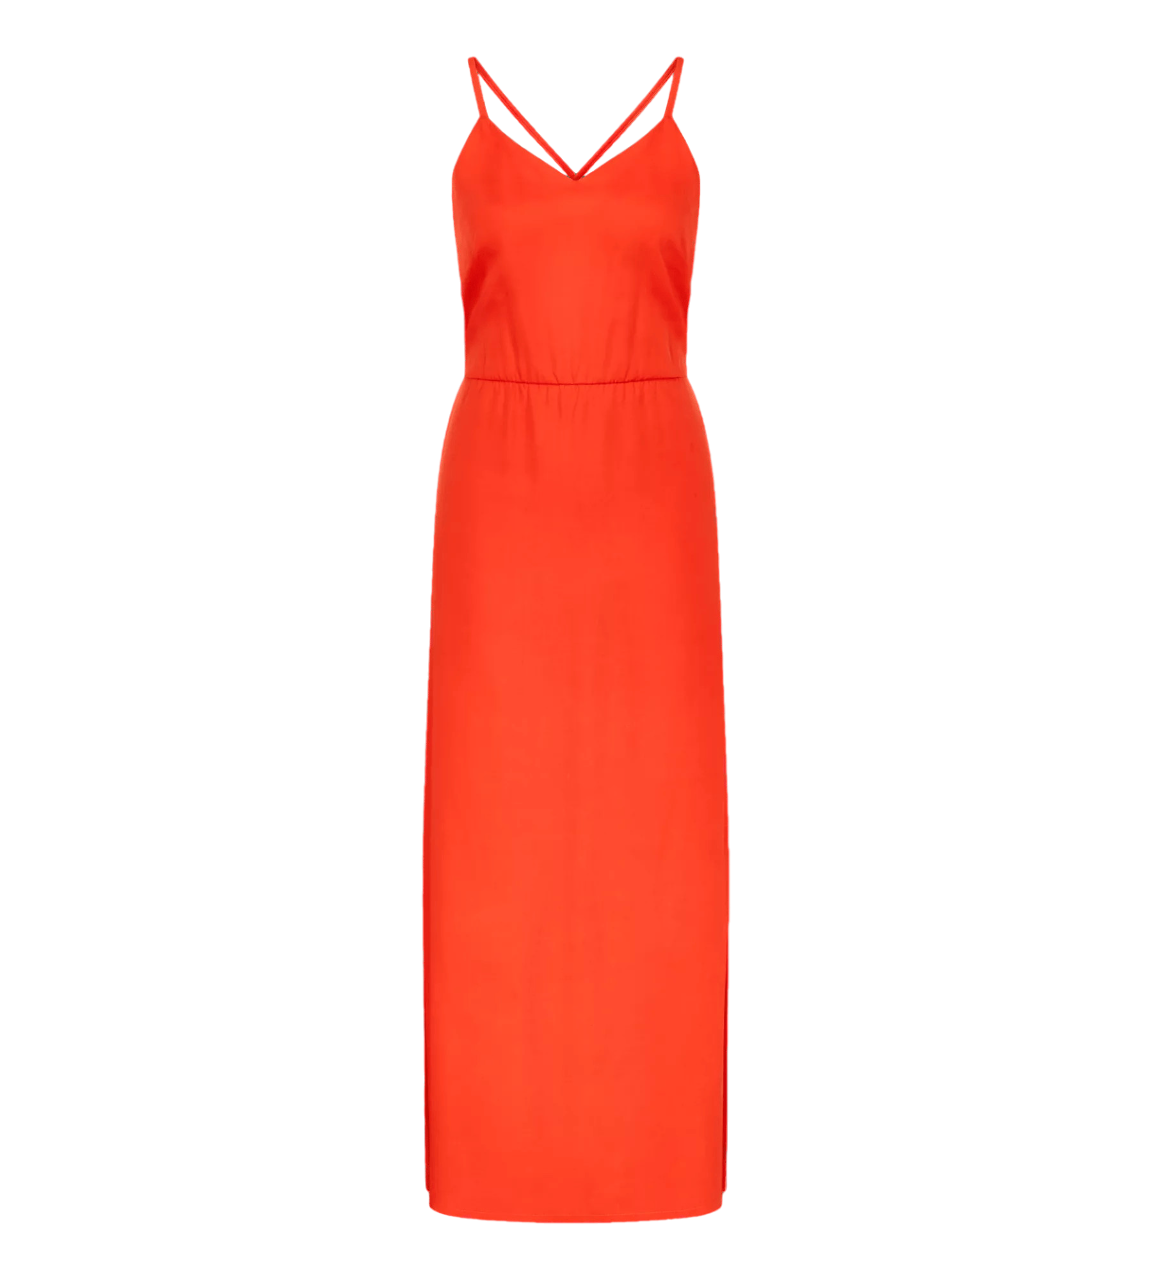 Dámské plážové šaty Beach MyWear Maxi Dress 01 sd - RED - červené 6714 - TRIUMPH RED 36